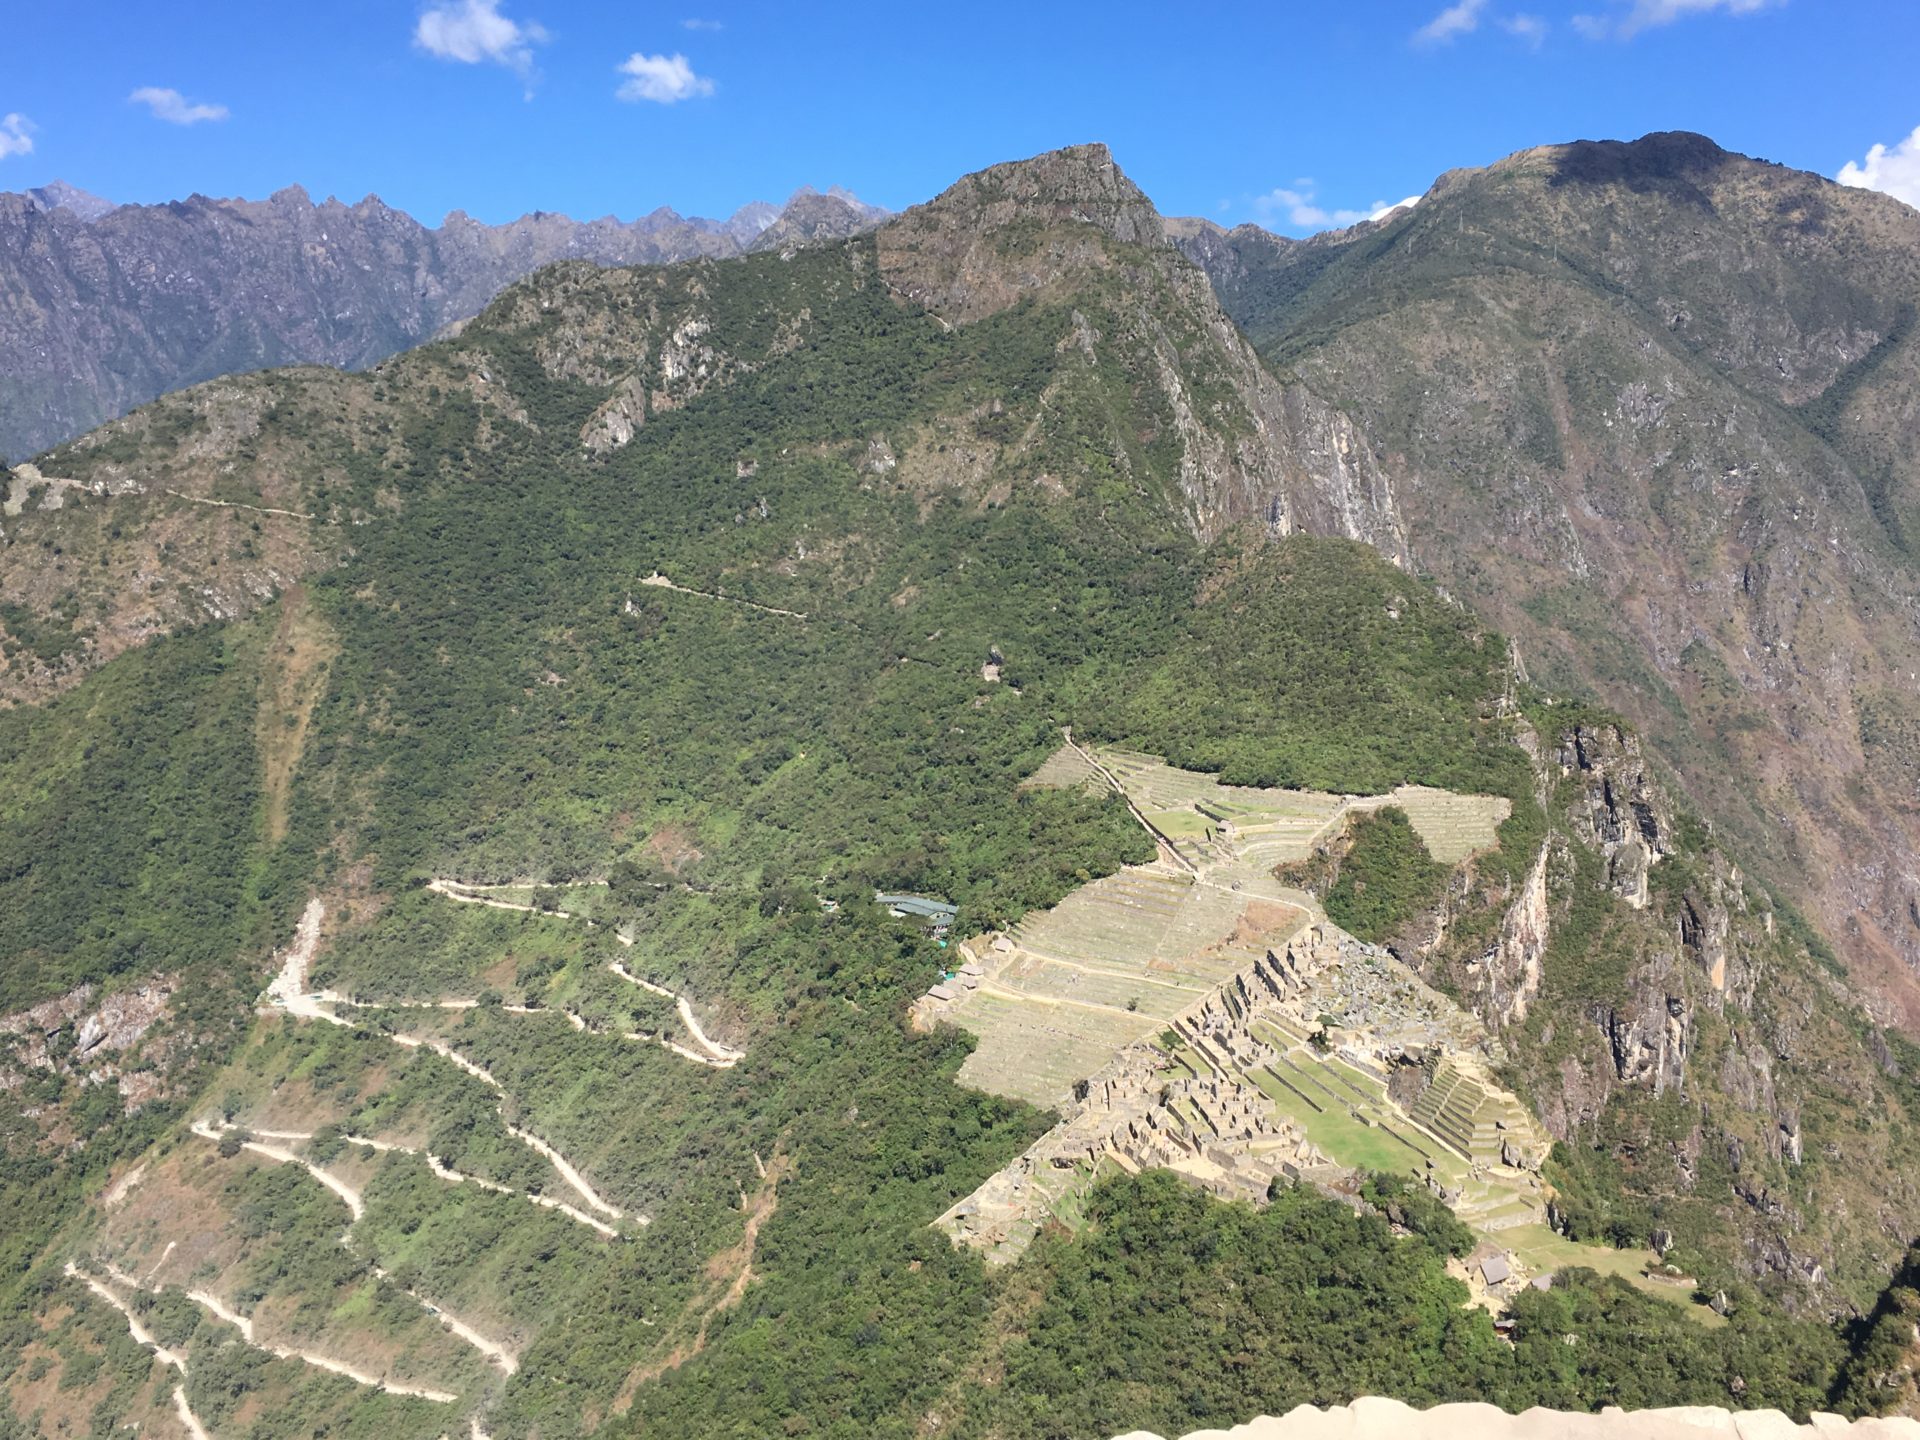 Bus route to Machu Picchu